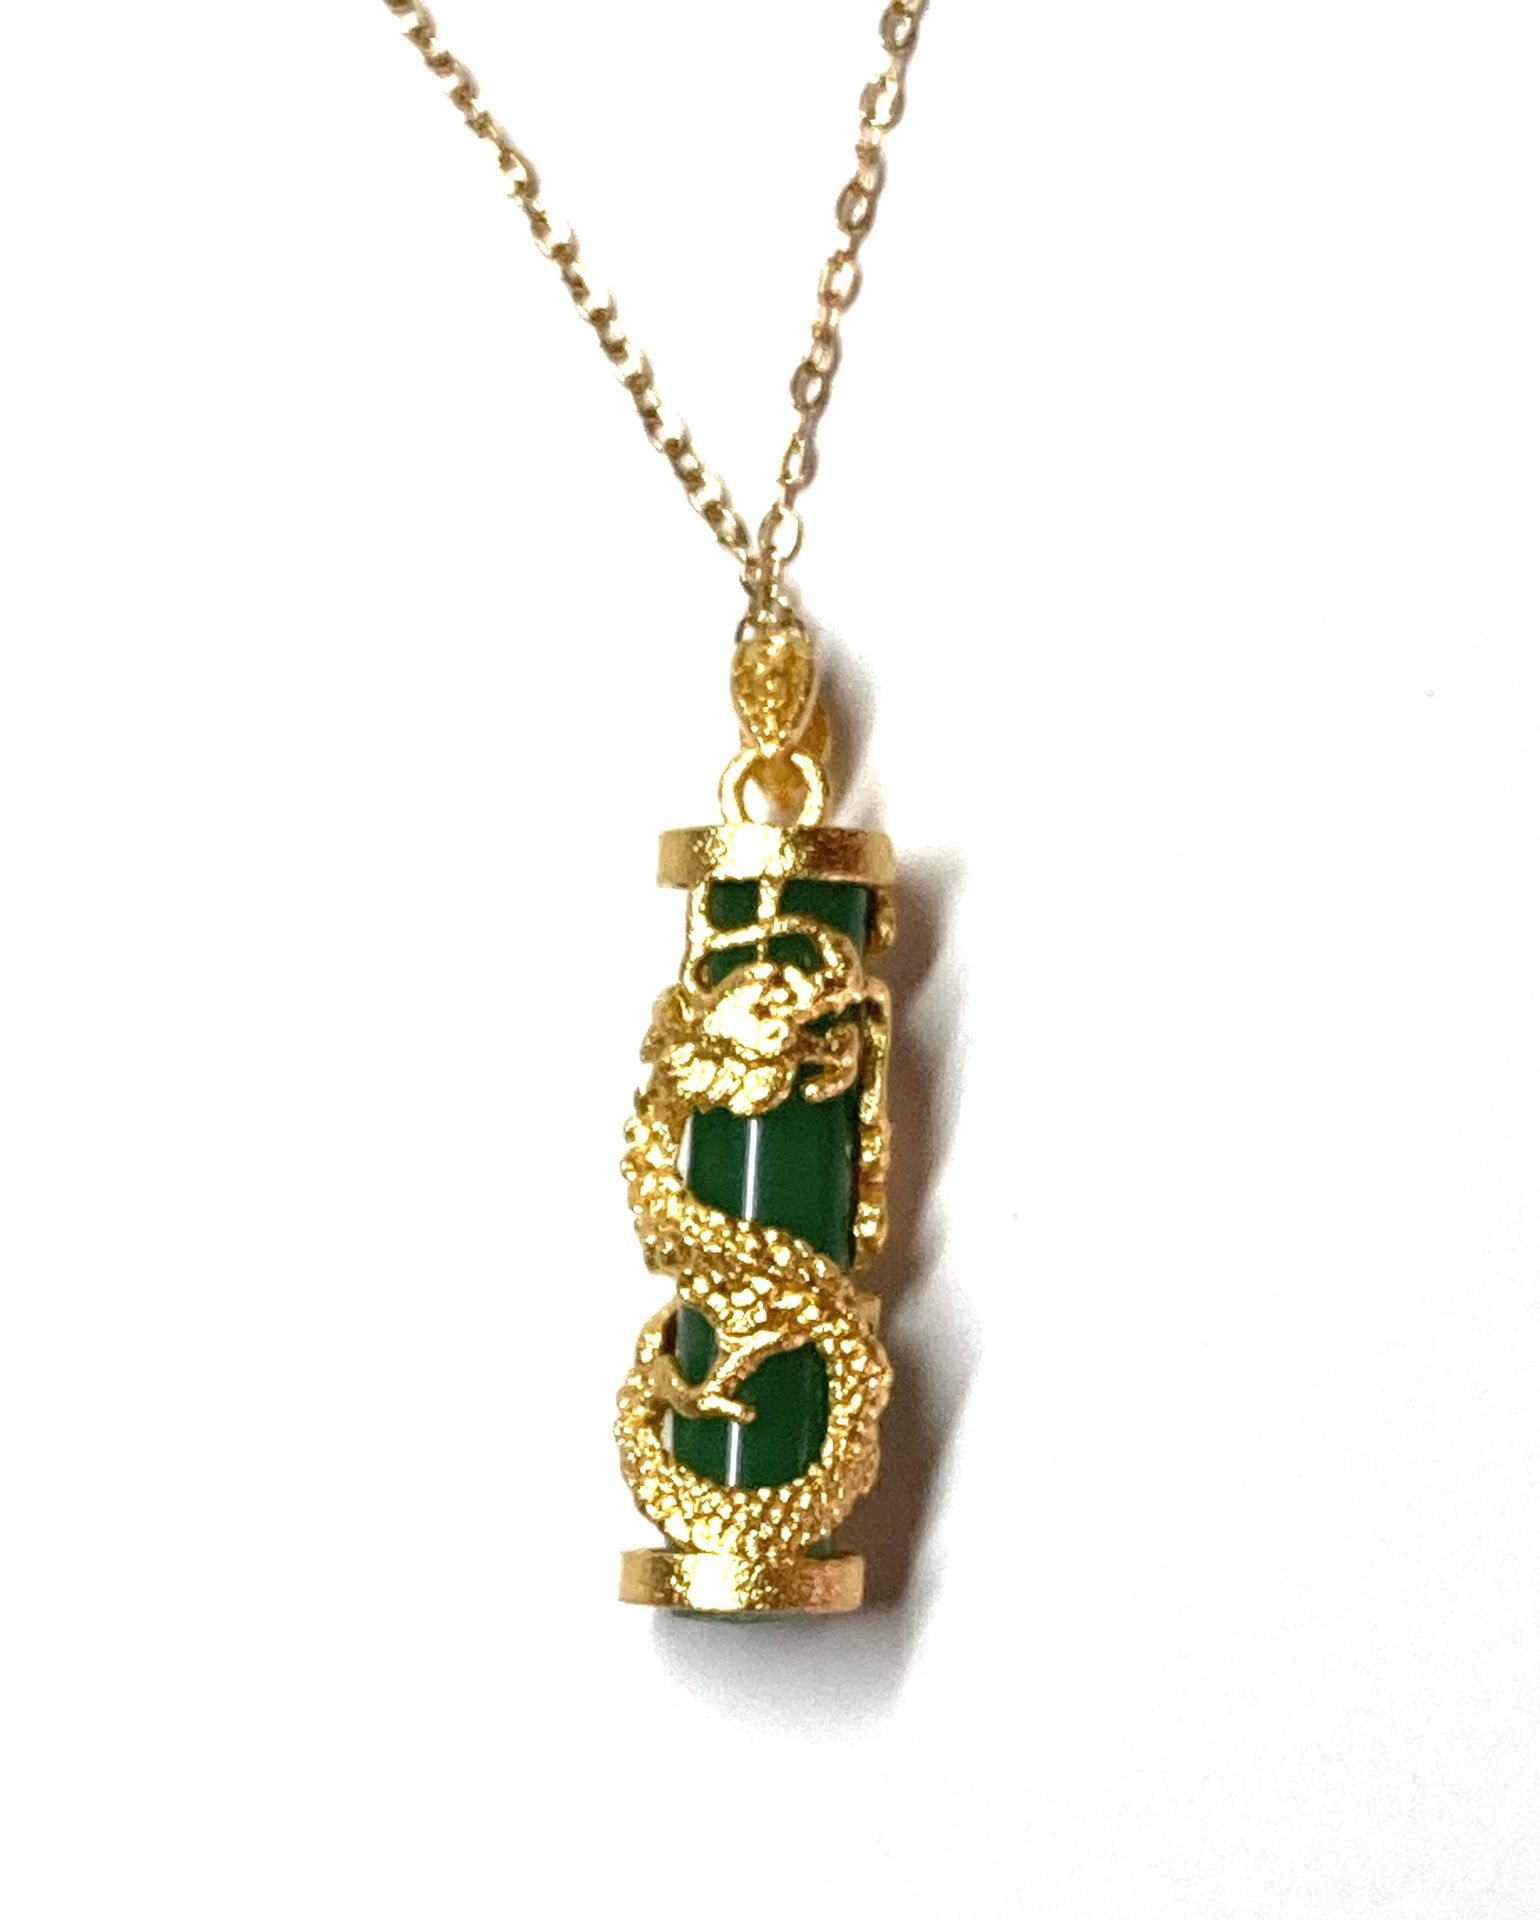 Gold Plated Jade Jadeite Dragon Pendant Necklace 